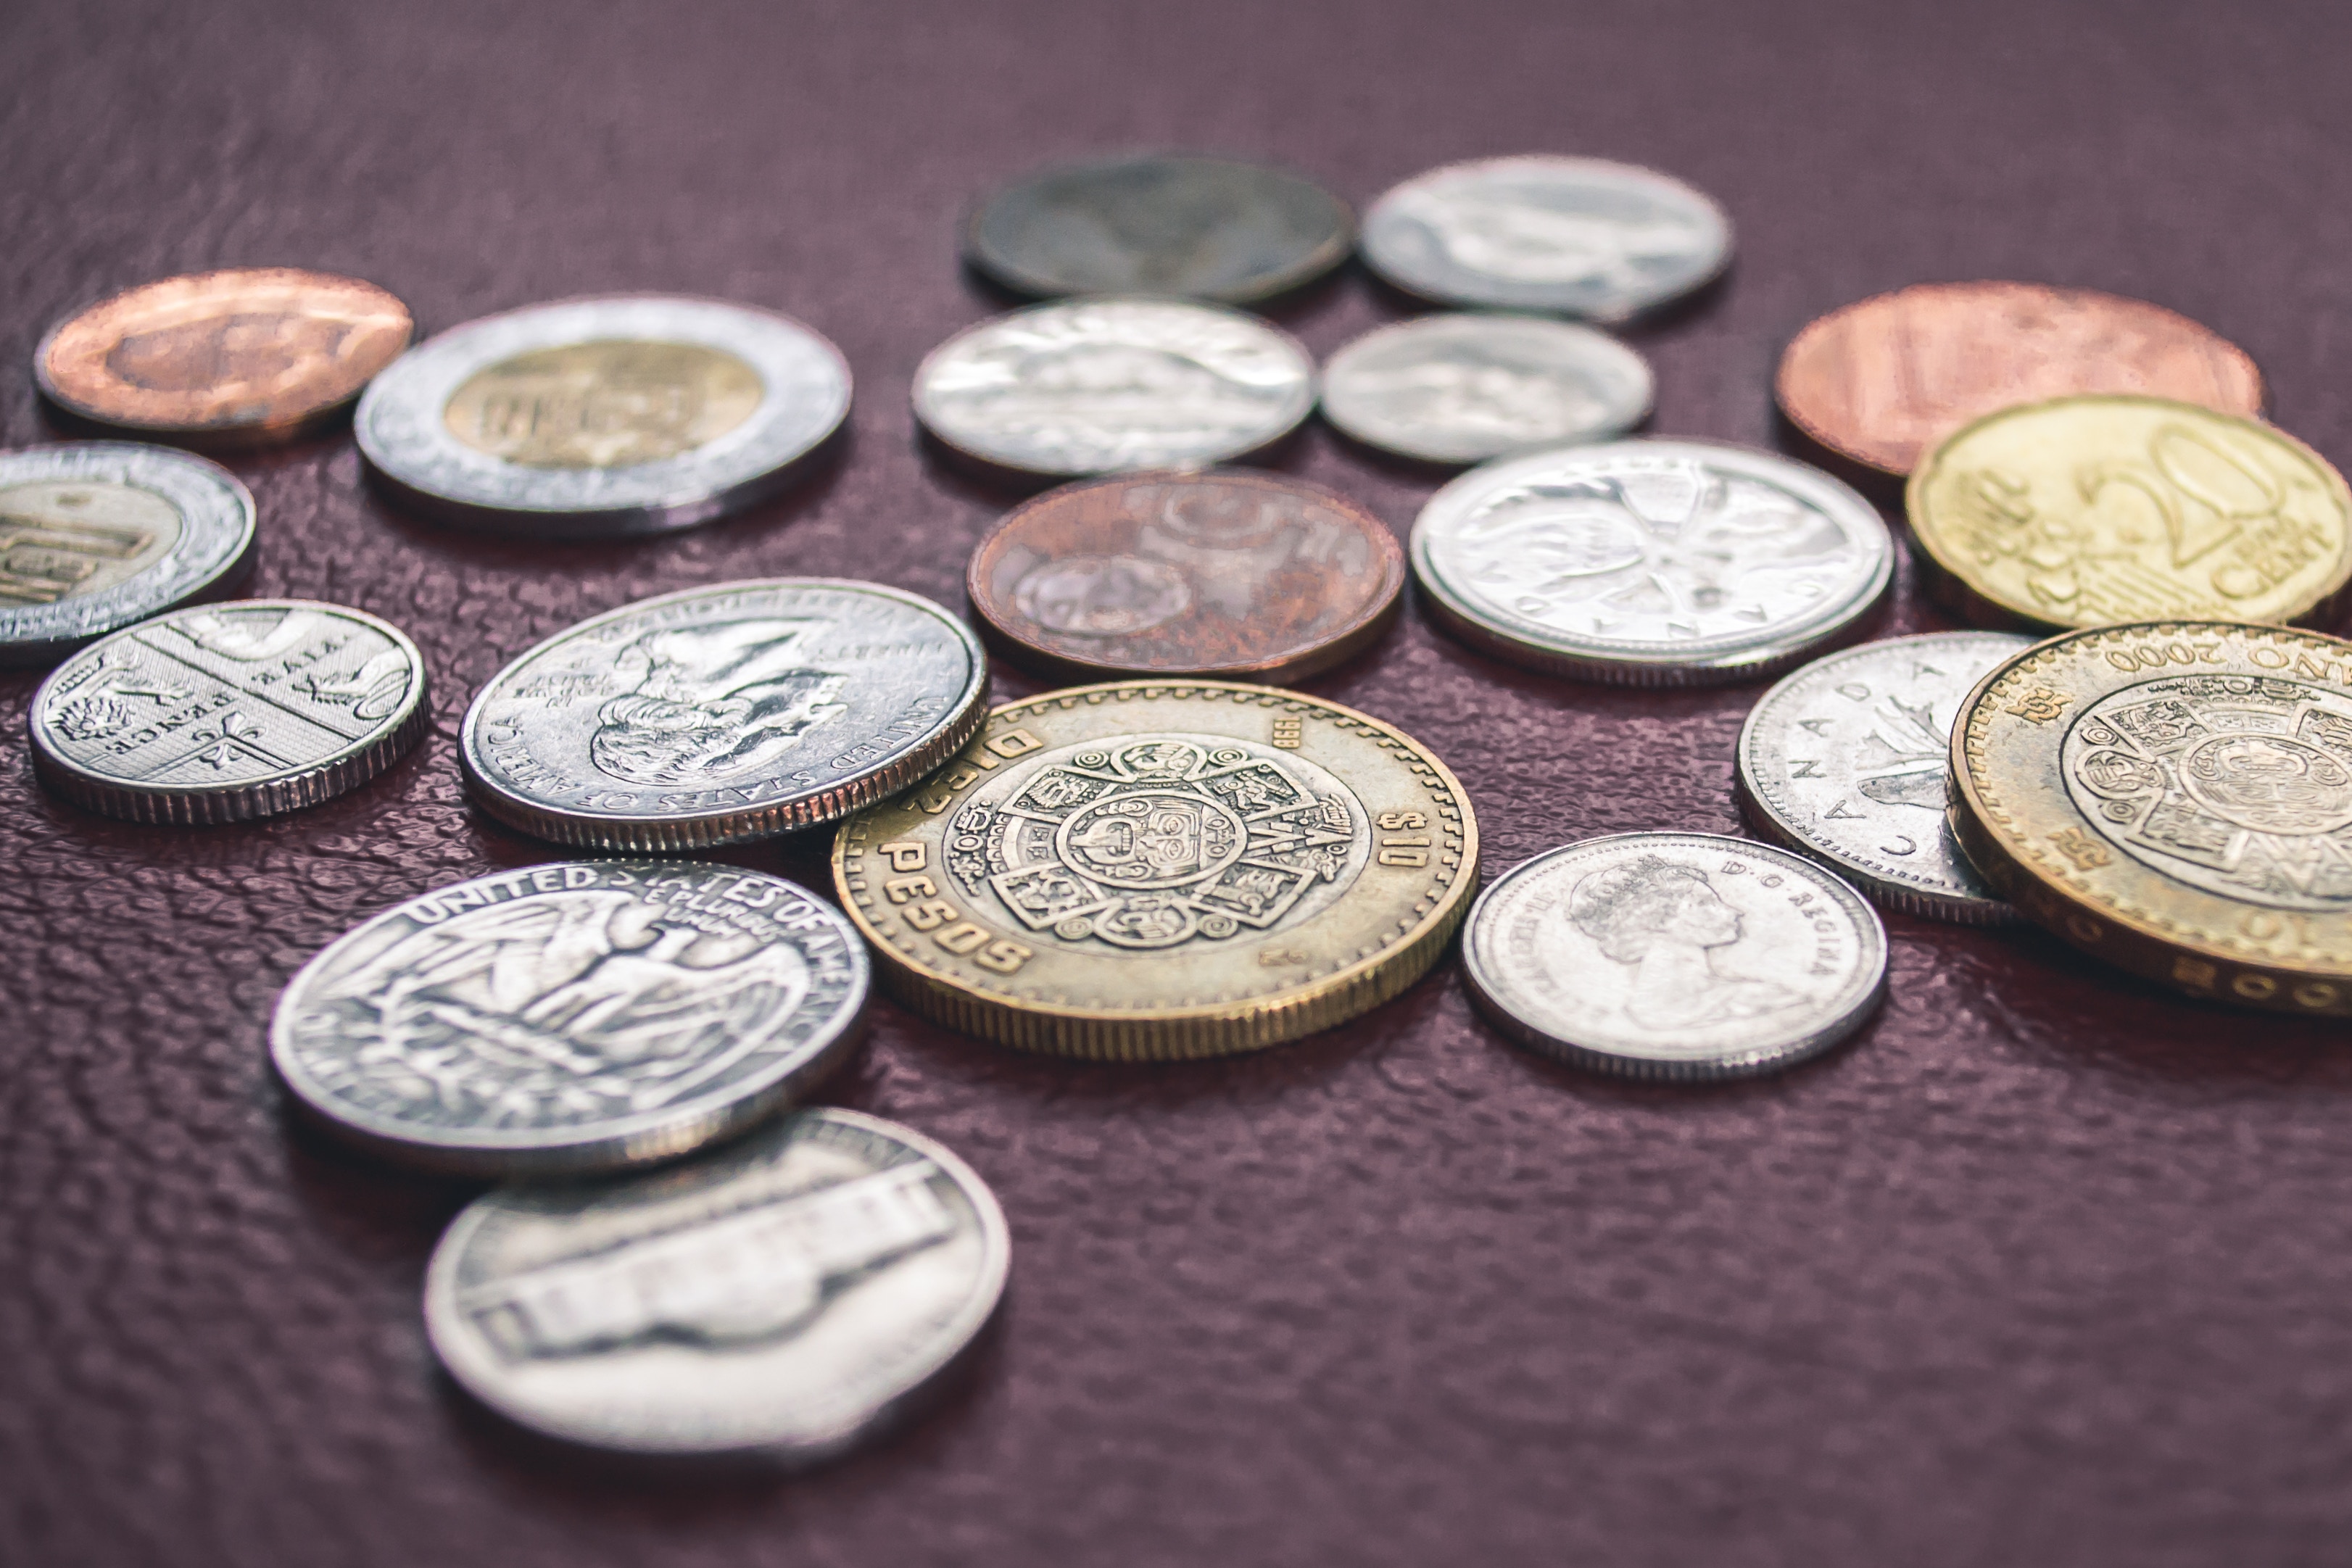 A close-up of an assortment of coins